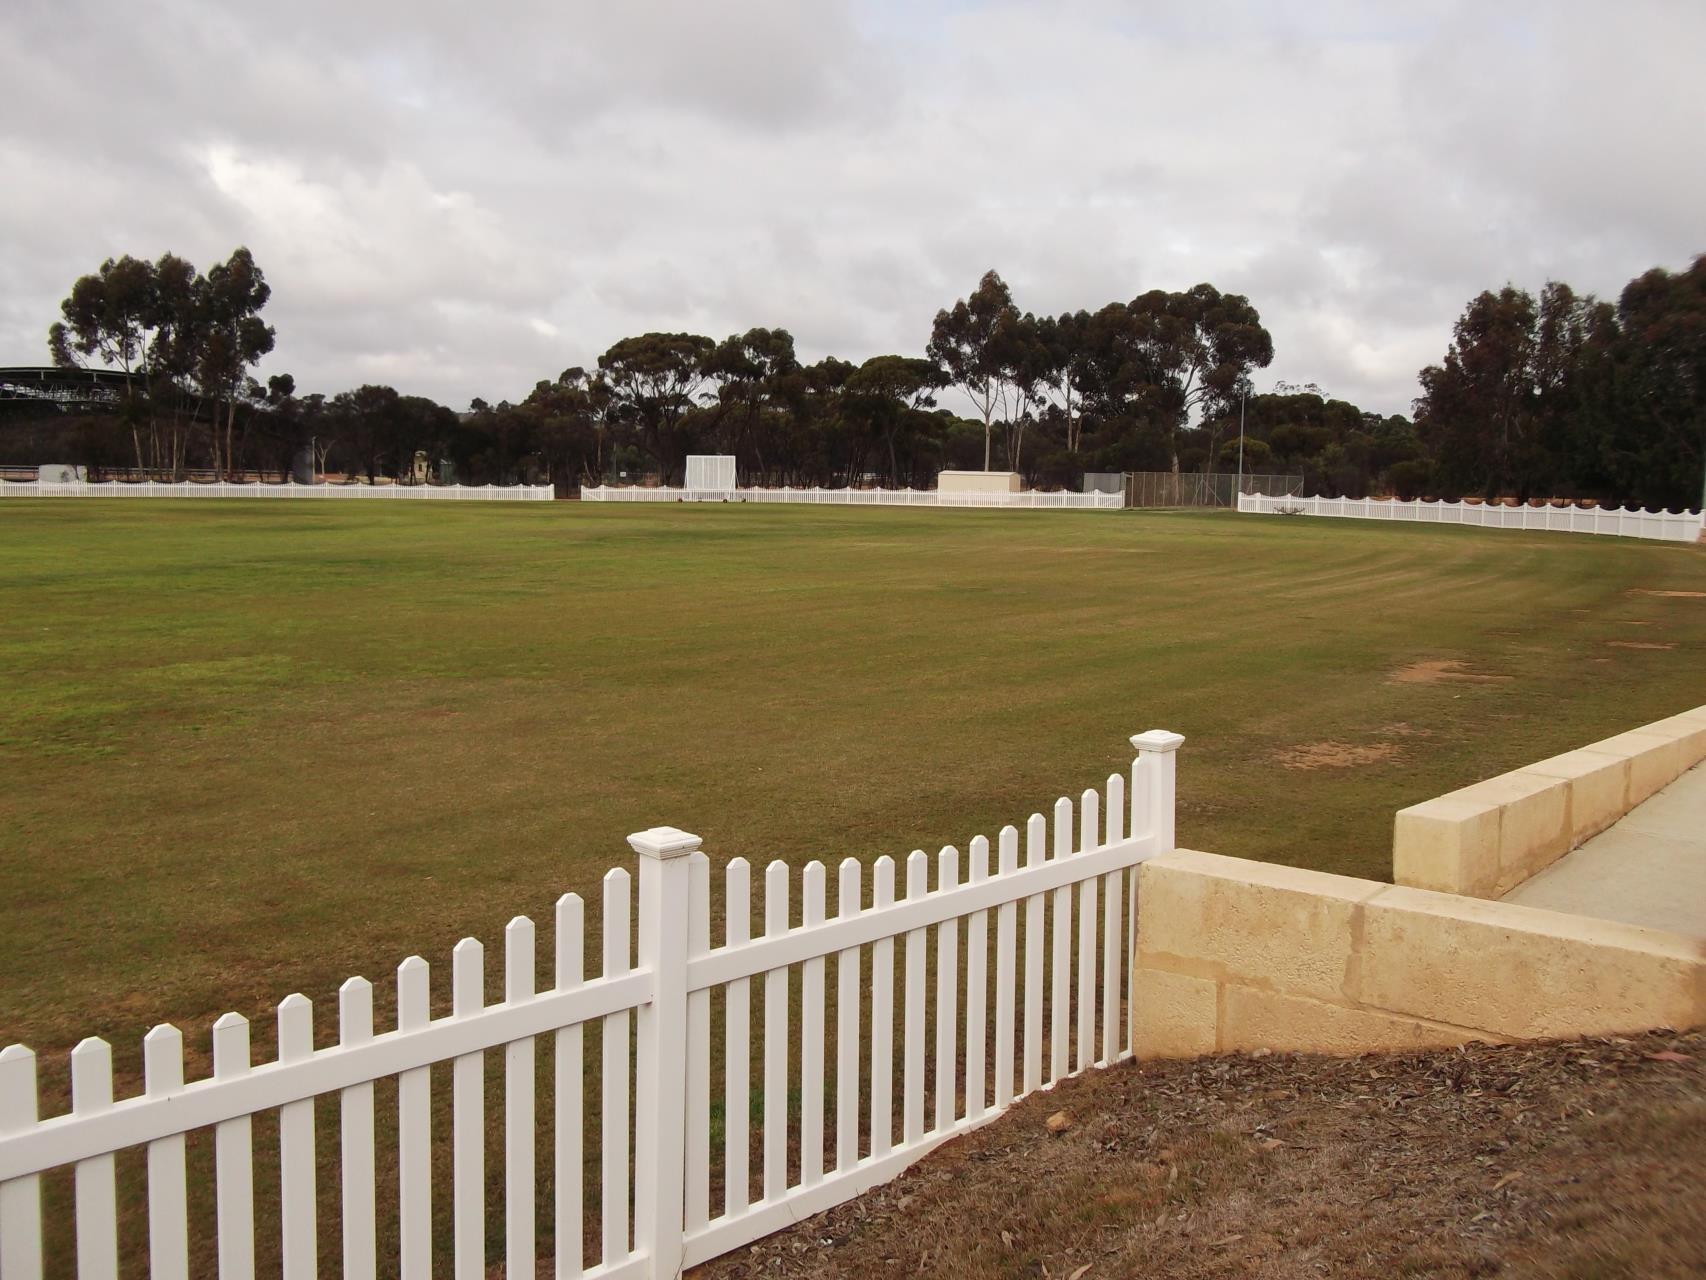 Cuballing Cricket Ground